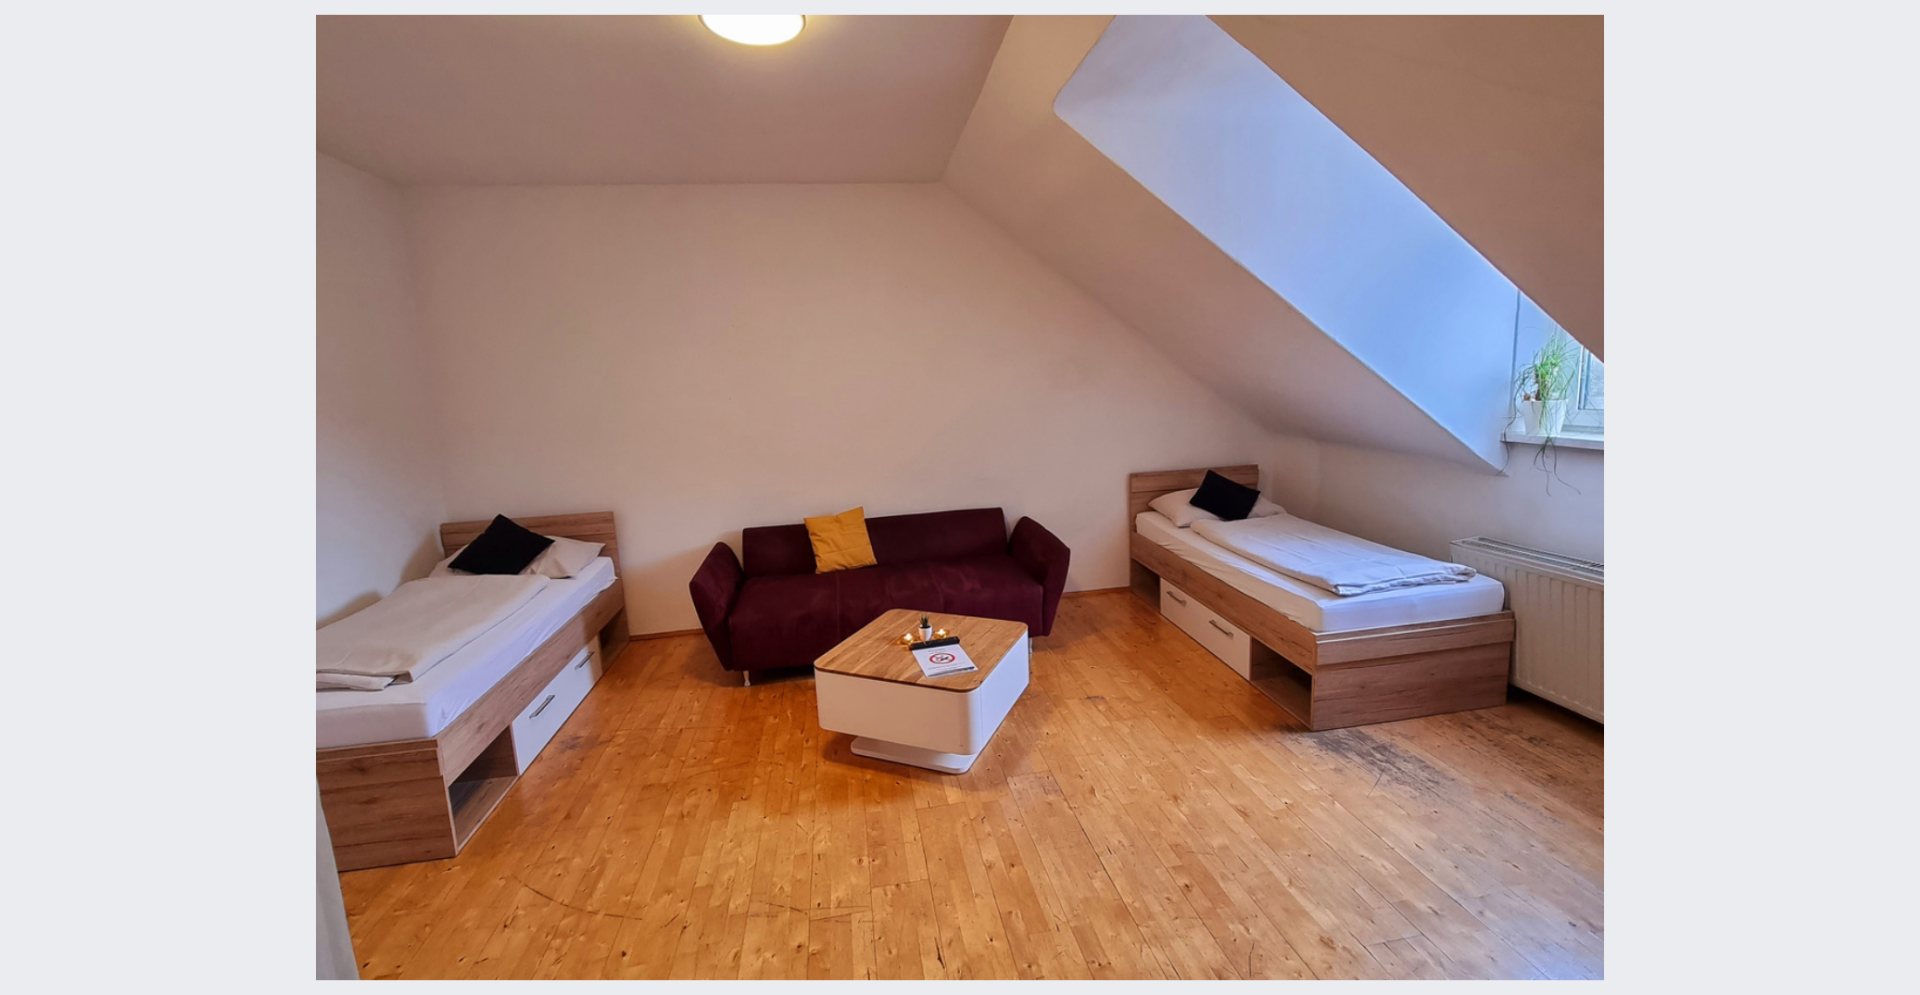 Apartmenthaus Worker's Apartments Leoben phase2 projekt GmbH, Frau Melanie Ploder 8700 Leitendorf 1700641937655dbc91d30ce